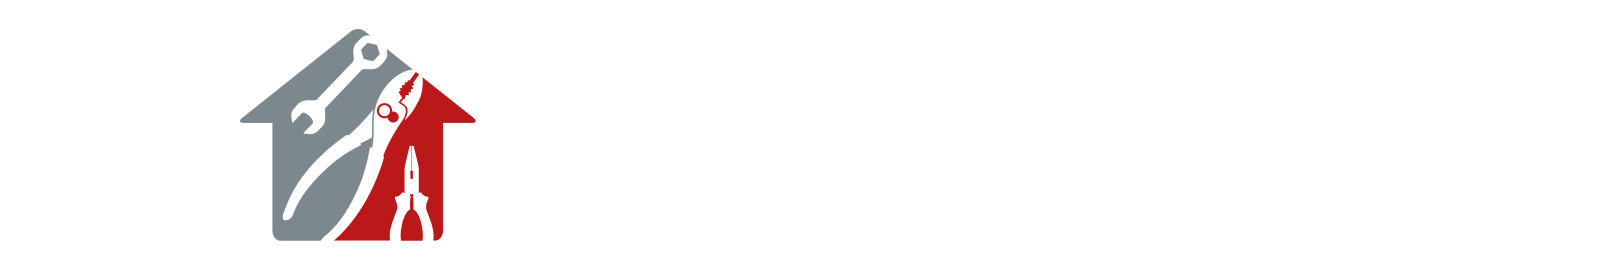 ELON automation